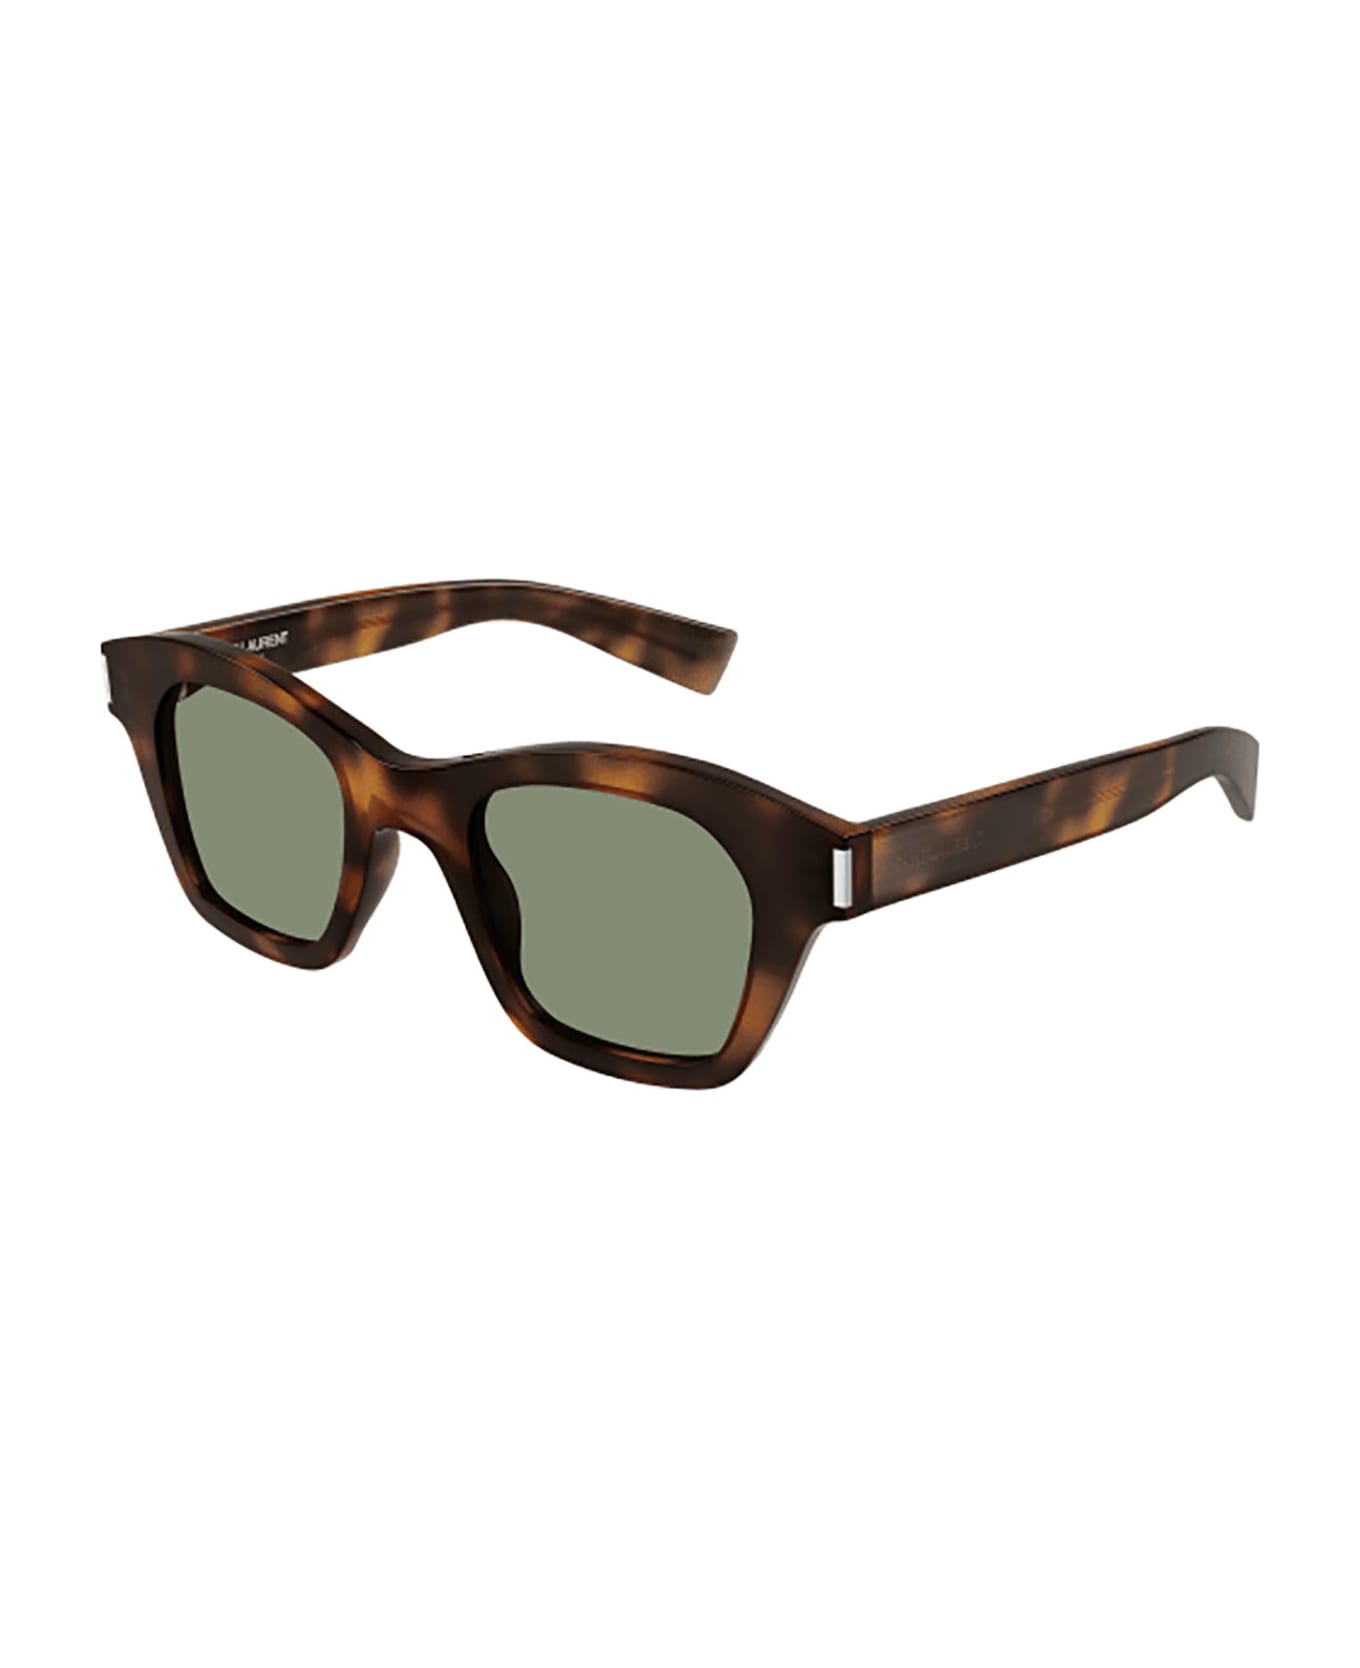 Saint Laurent Eyewear SL 592 Sunglasses - Havana Havana Green